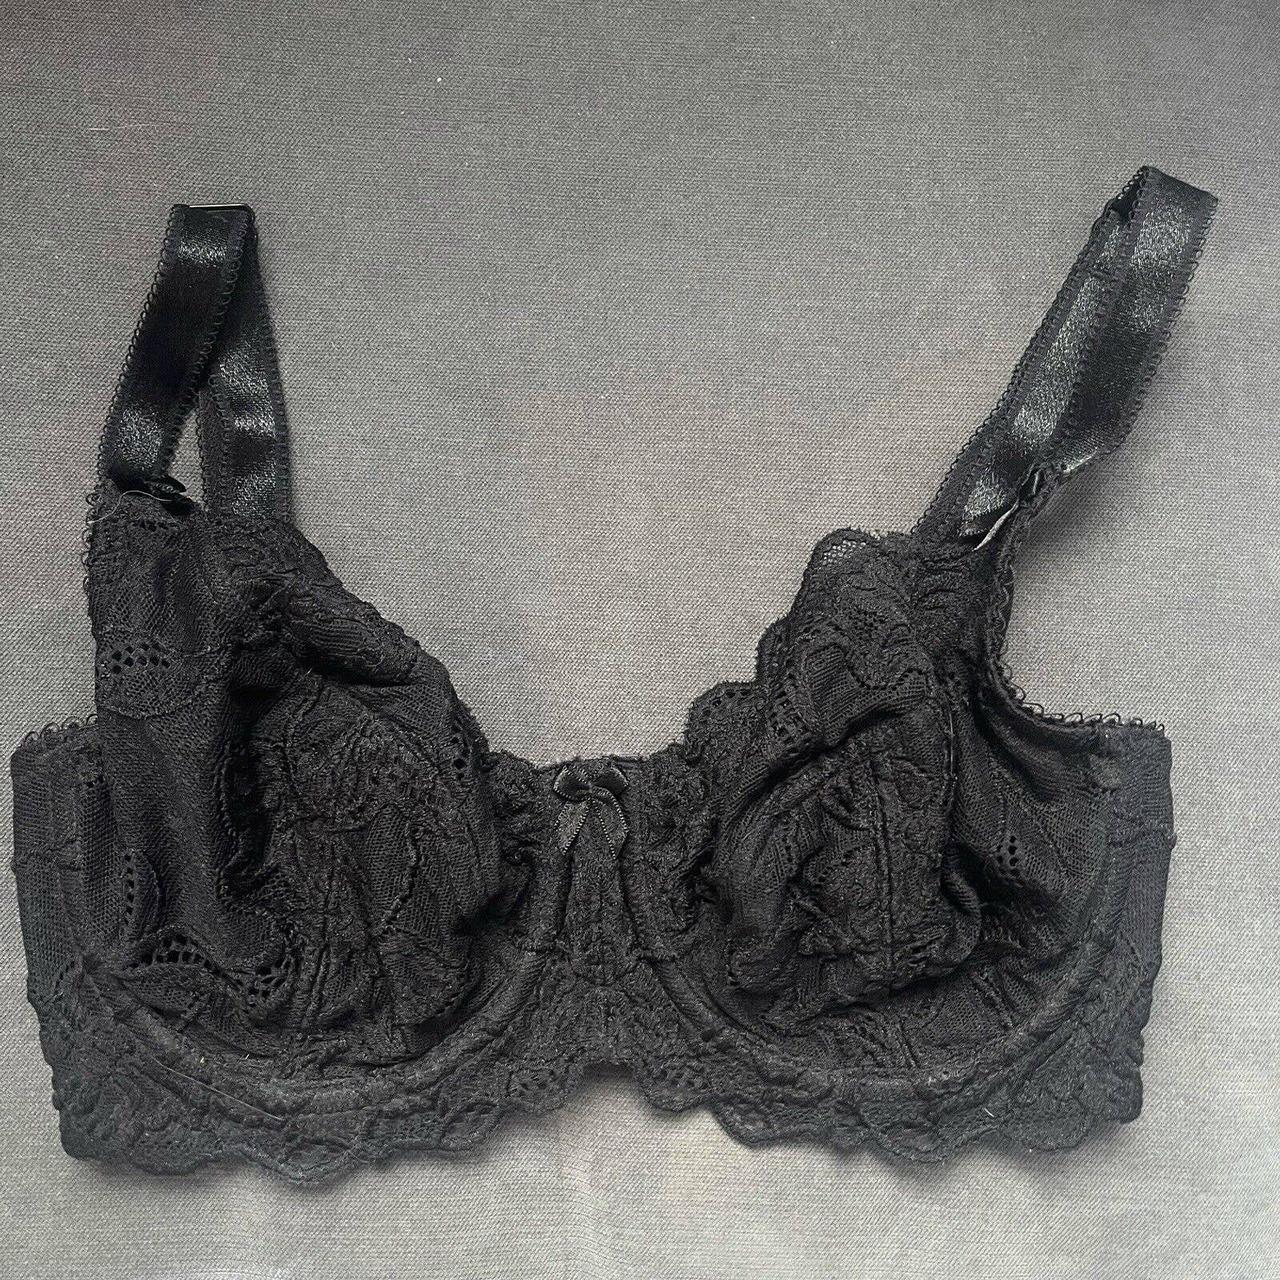 Product Image 1 - Women's Figleaves Bra
Size US/UK 30E
Black
Floral